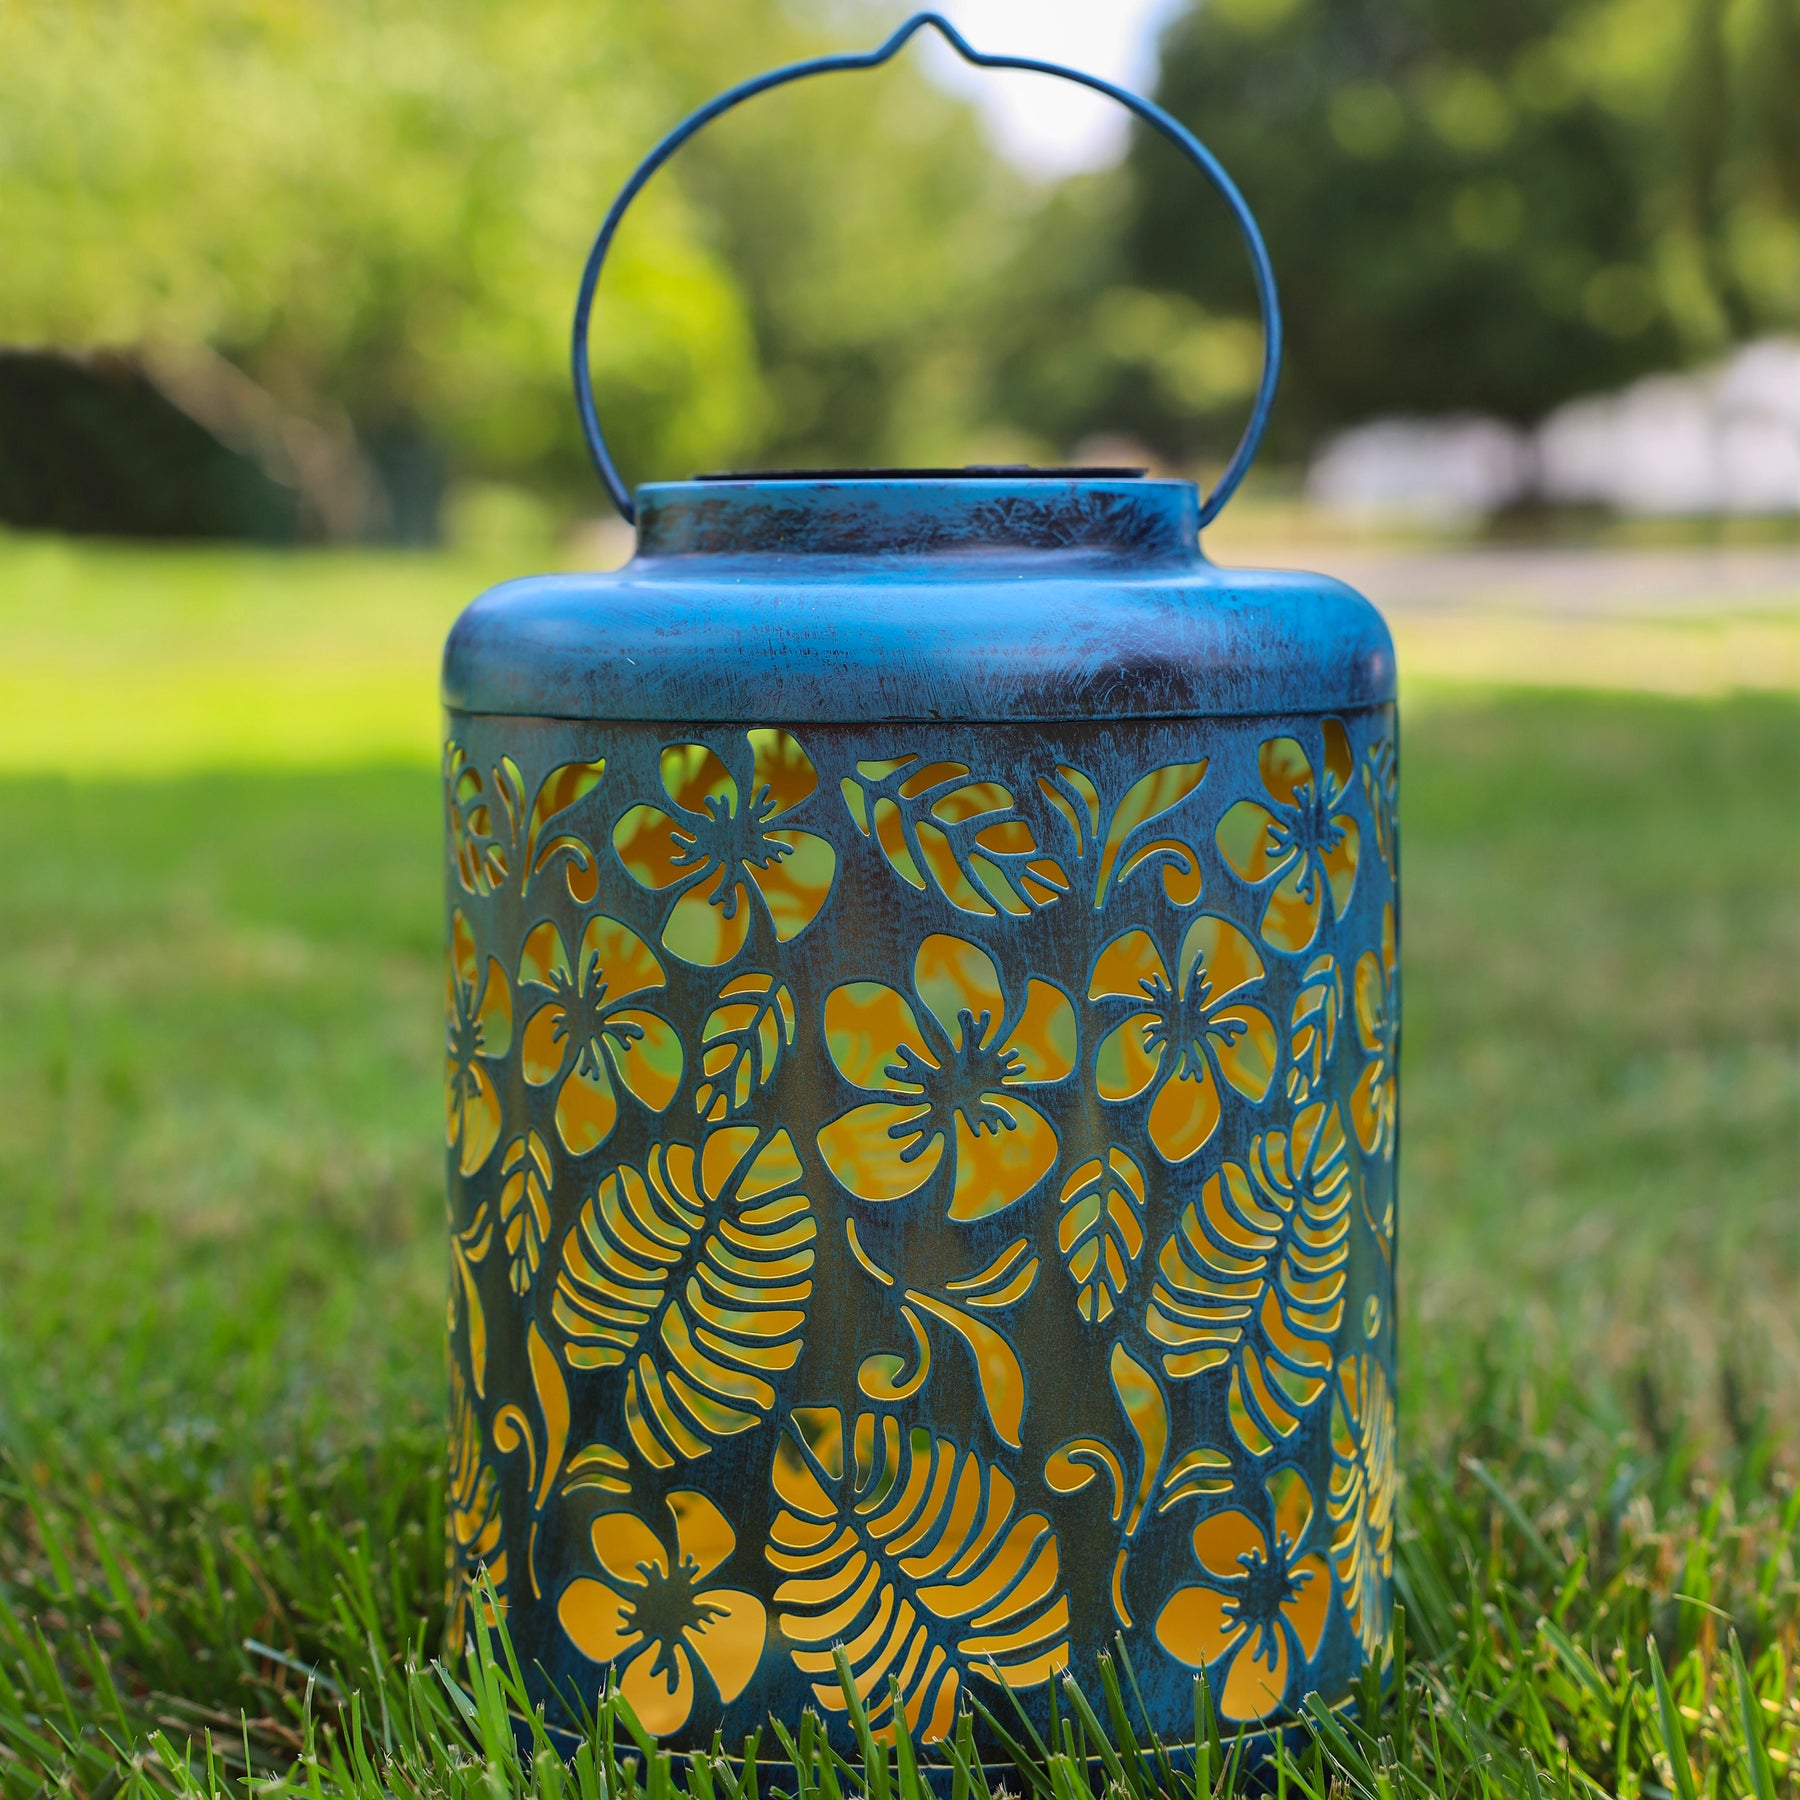 Blue Solar Lantern with tropical flower design standing on grass.